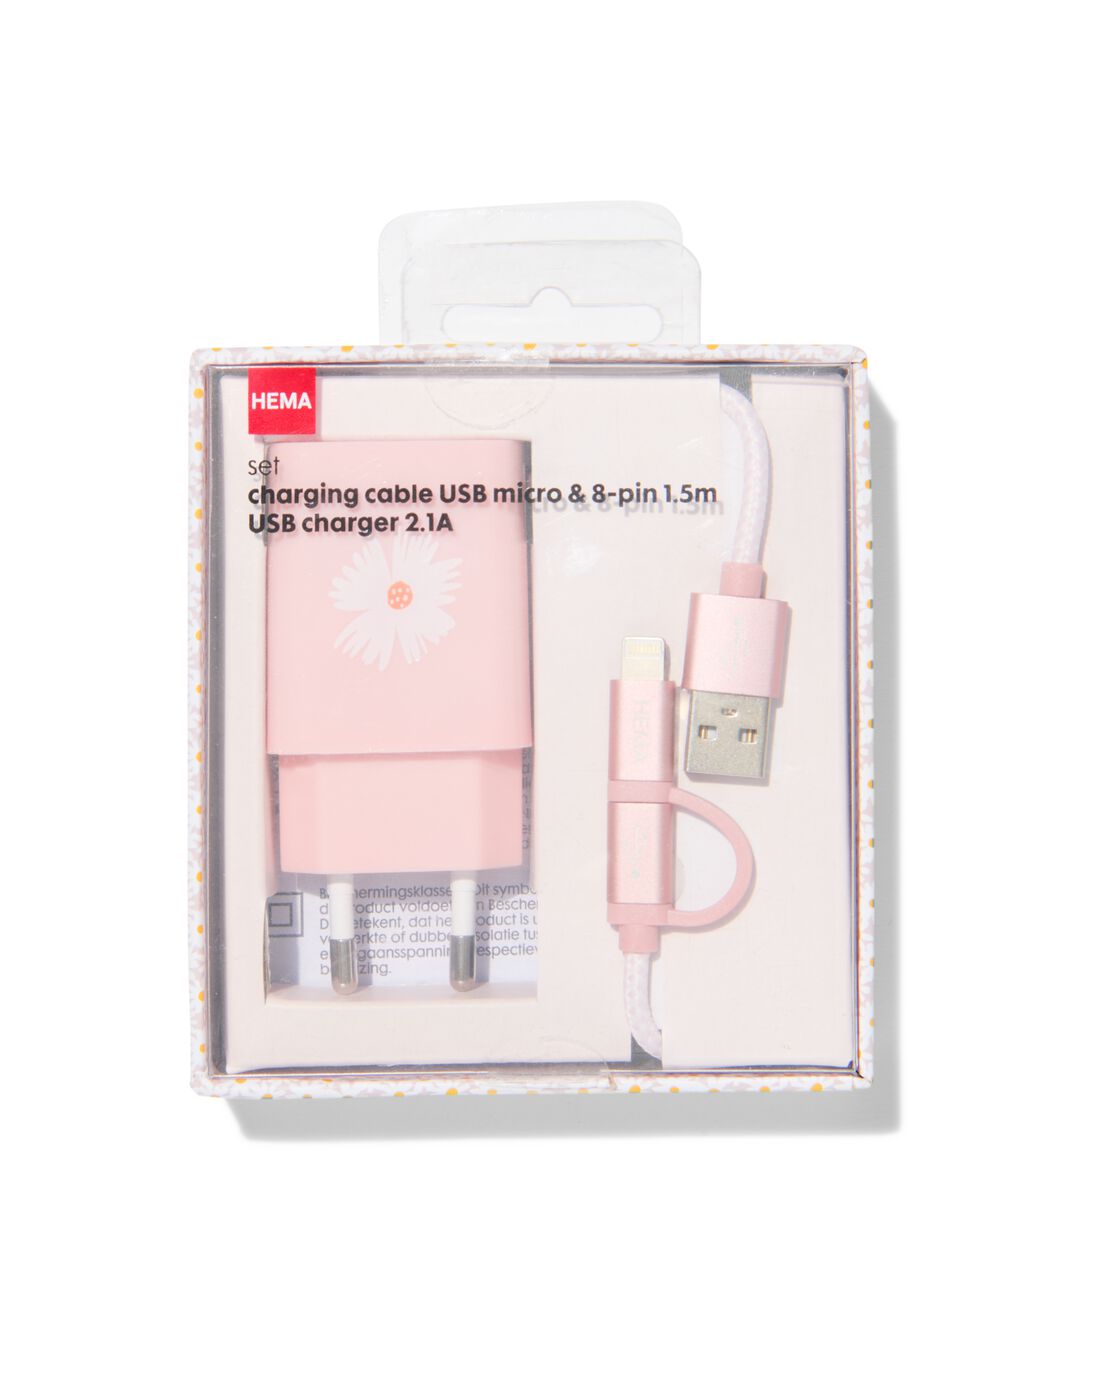 HEMA USB Laadkabel Micro-usb En 8-pin 1.5m Met Oplader 2.1A